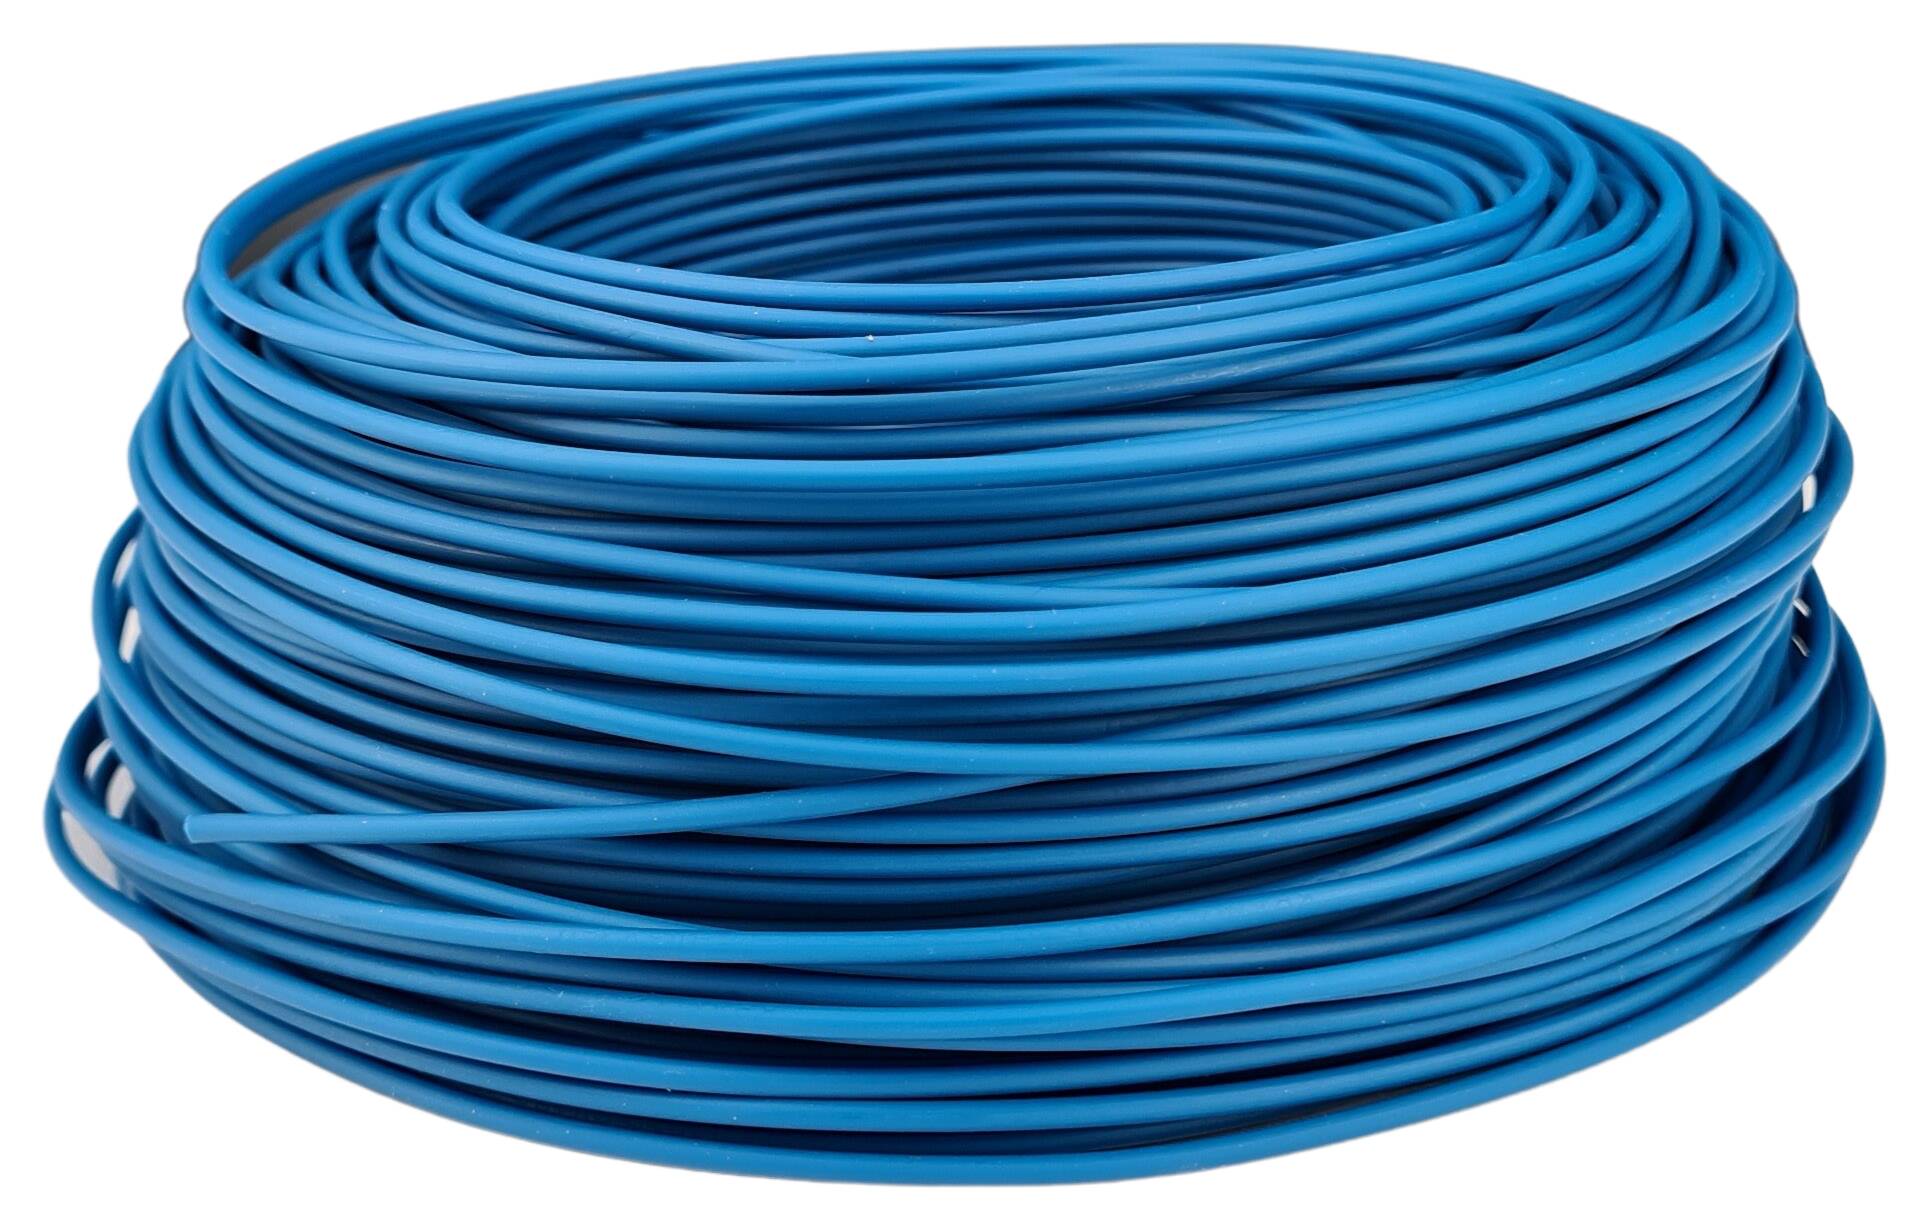 Kabel 1x0,75 H05V2-U starr blau